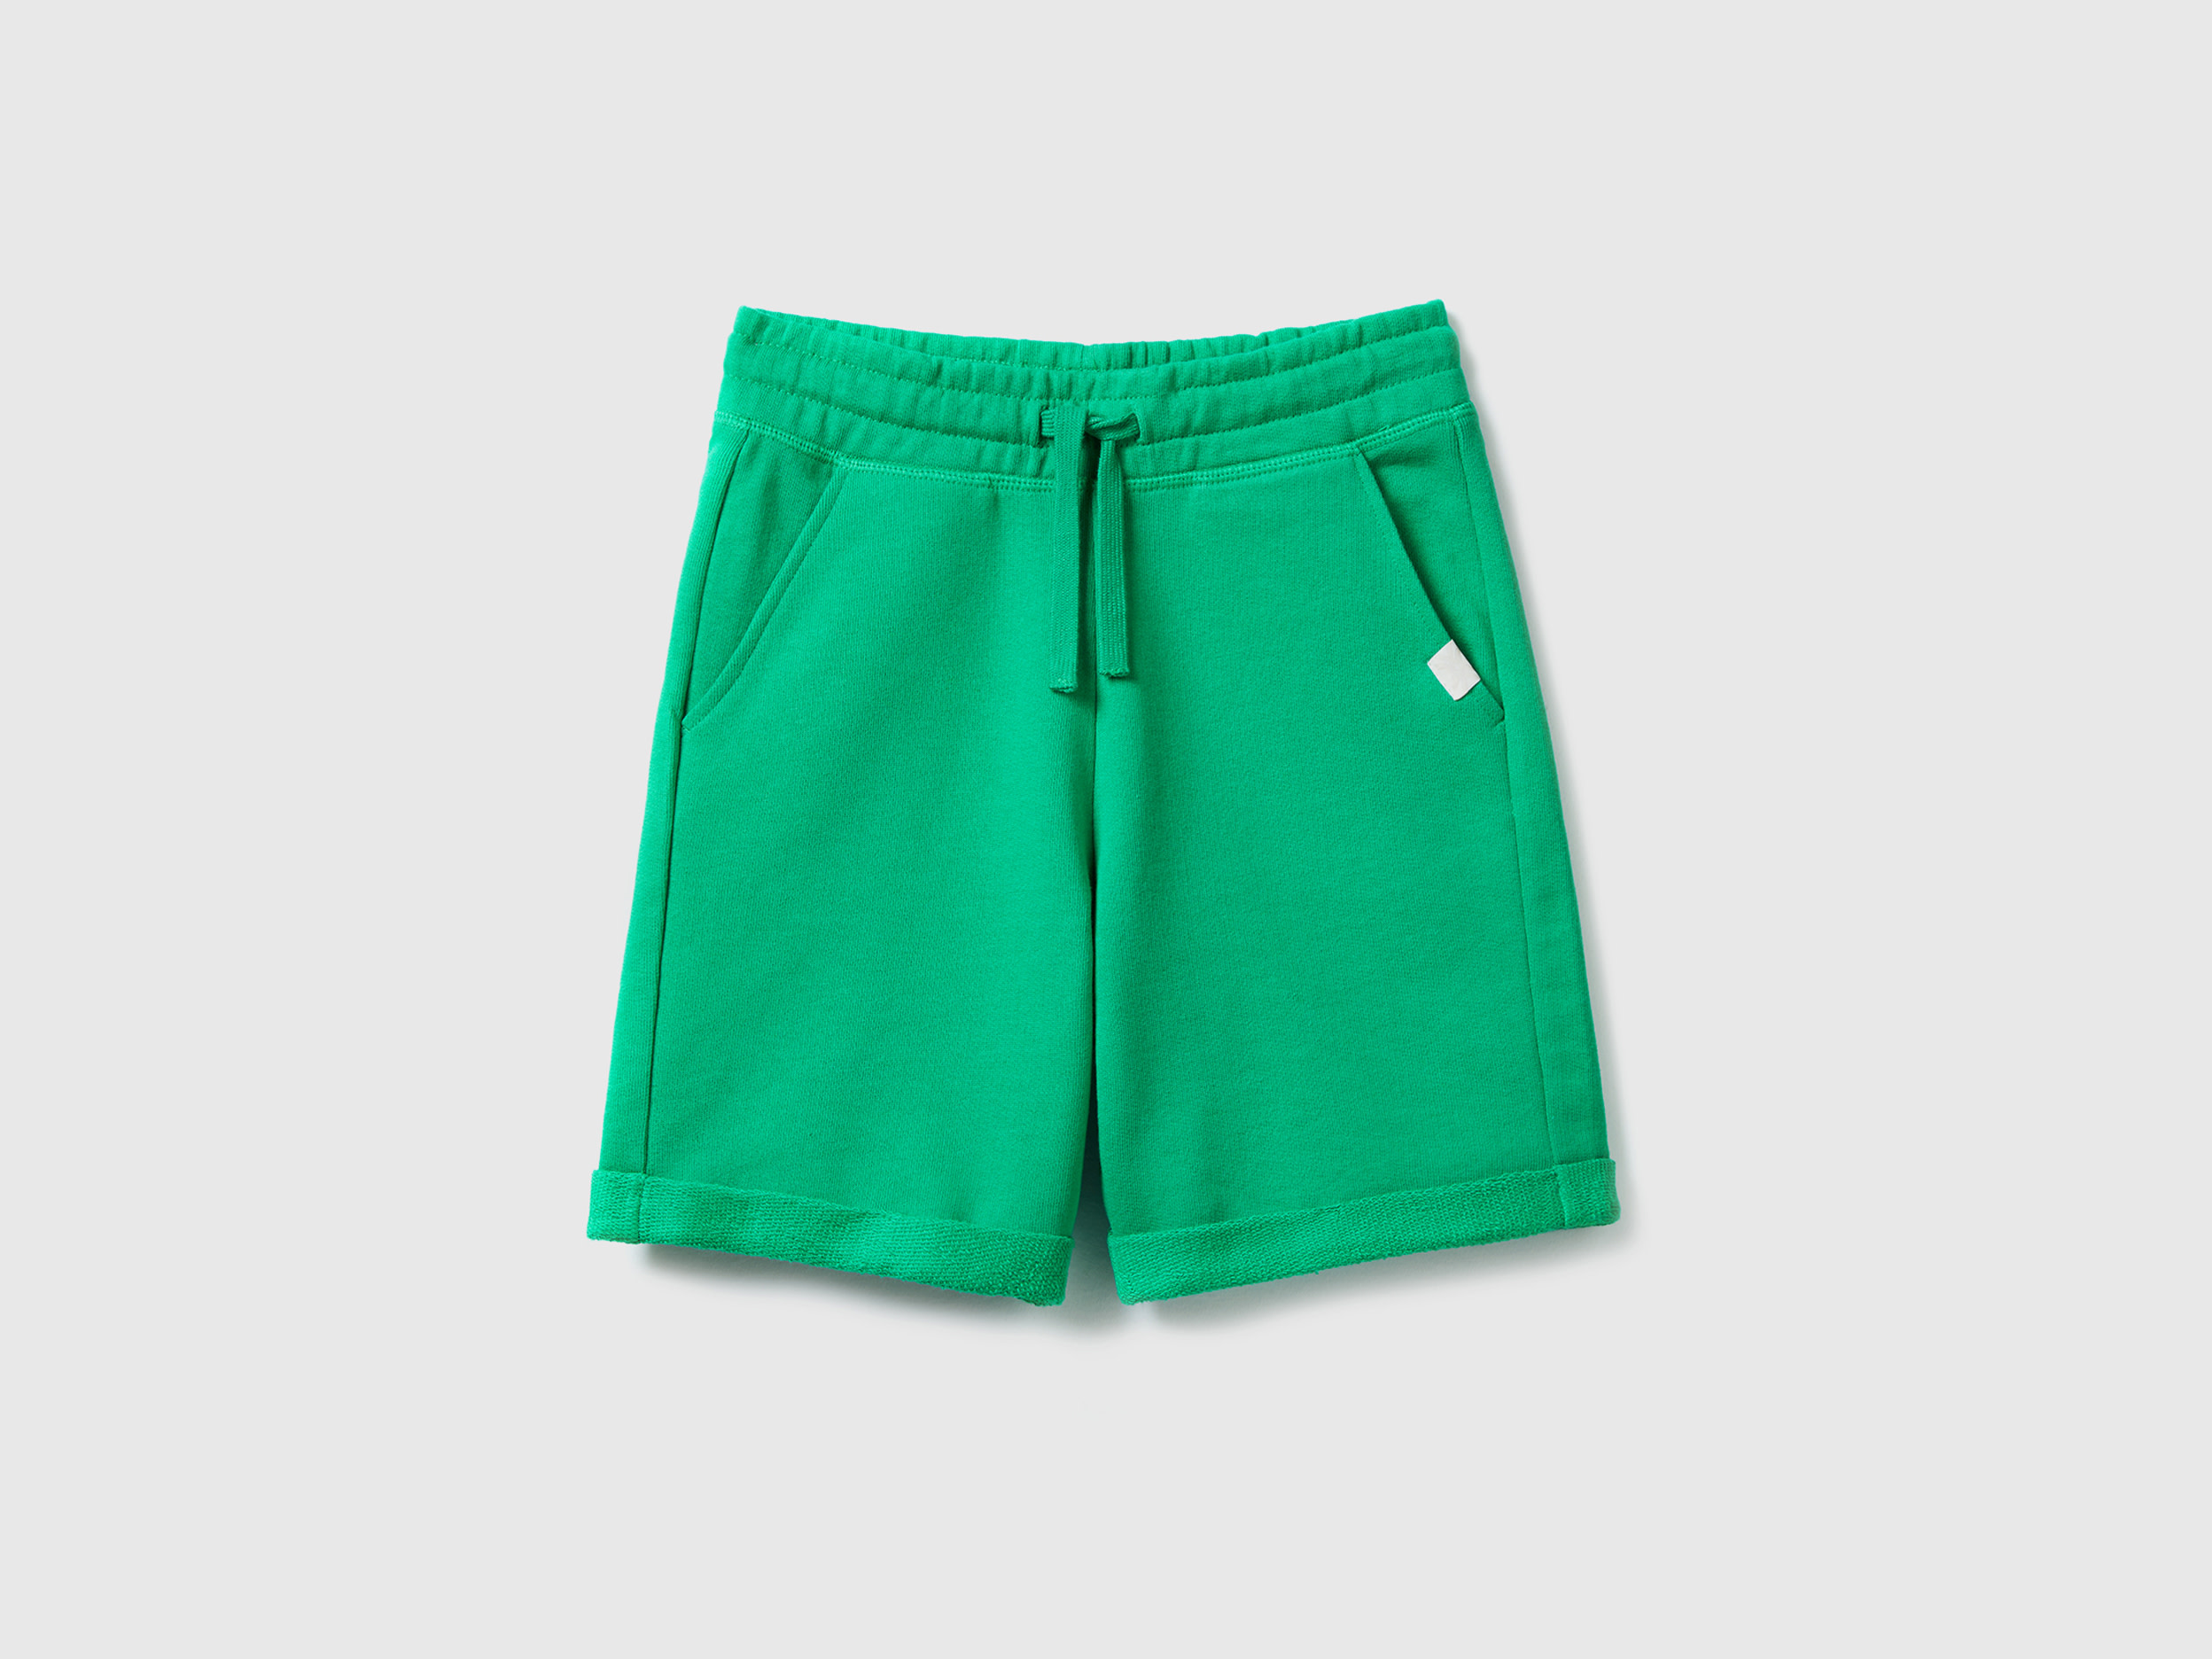 Benetton, Bermudas In Pure Cotton Sweat, size 3XL, Green, Kids